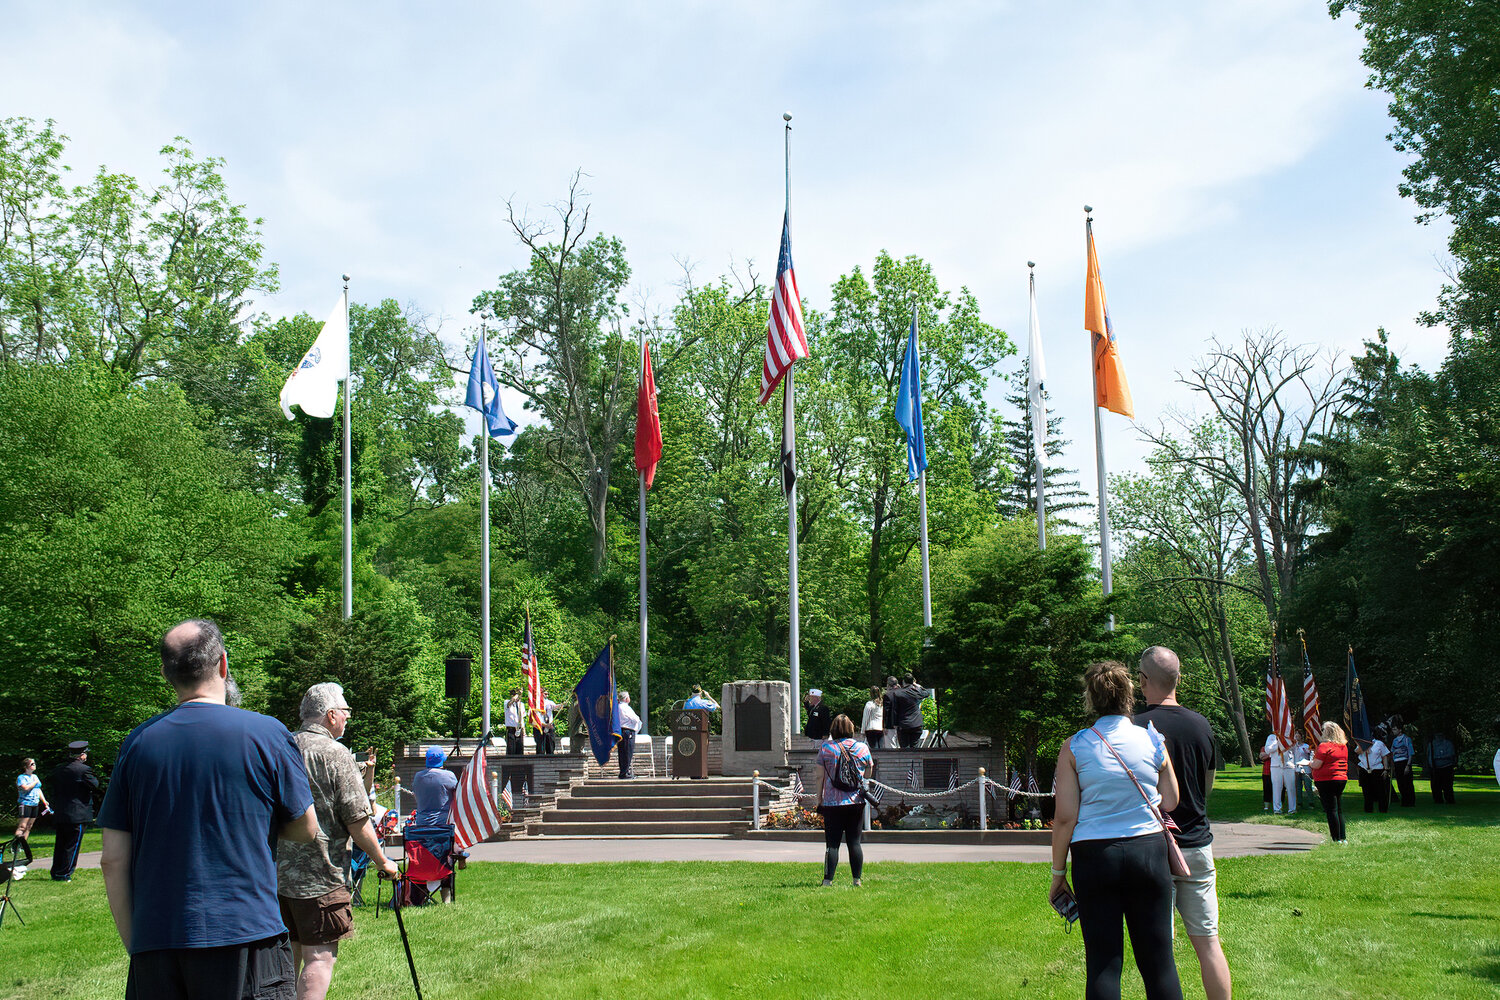 The Sellersville Memorial Day service was held at the Veteran’s Memorial in Lake Lenape Park.